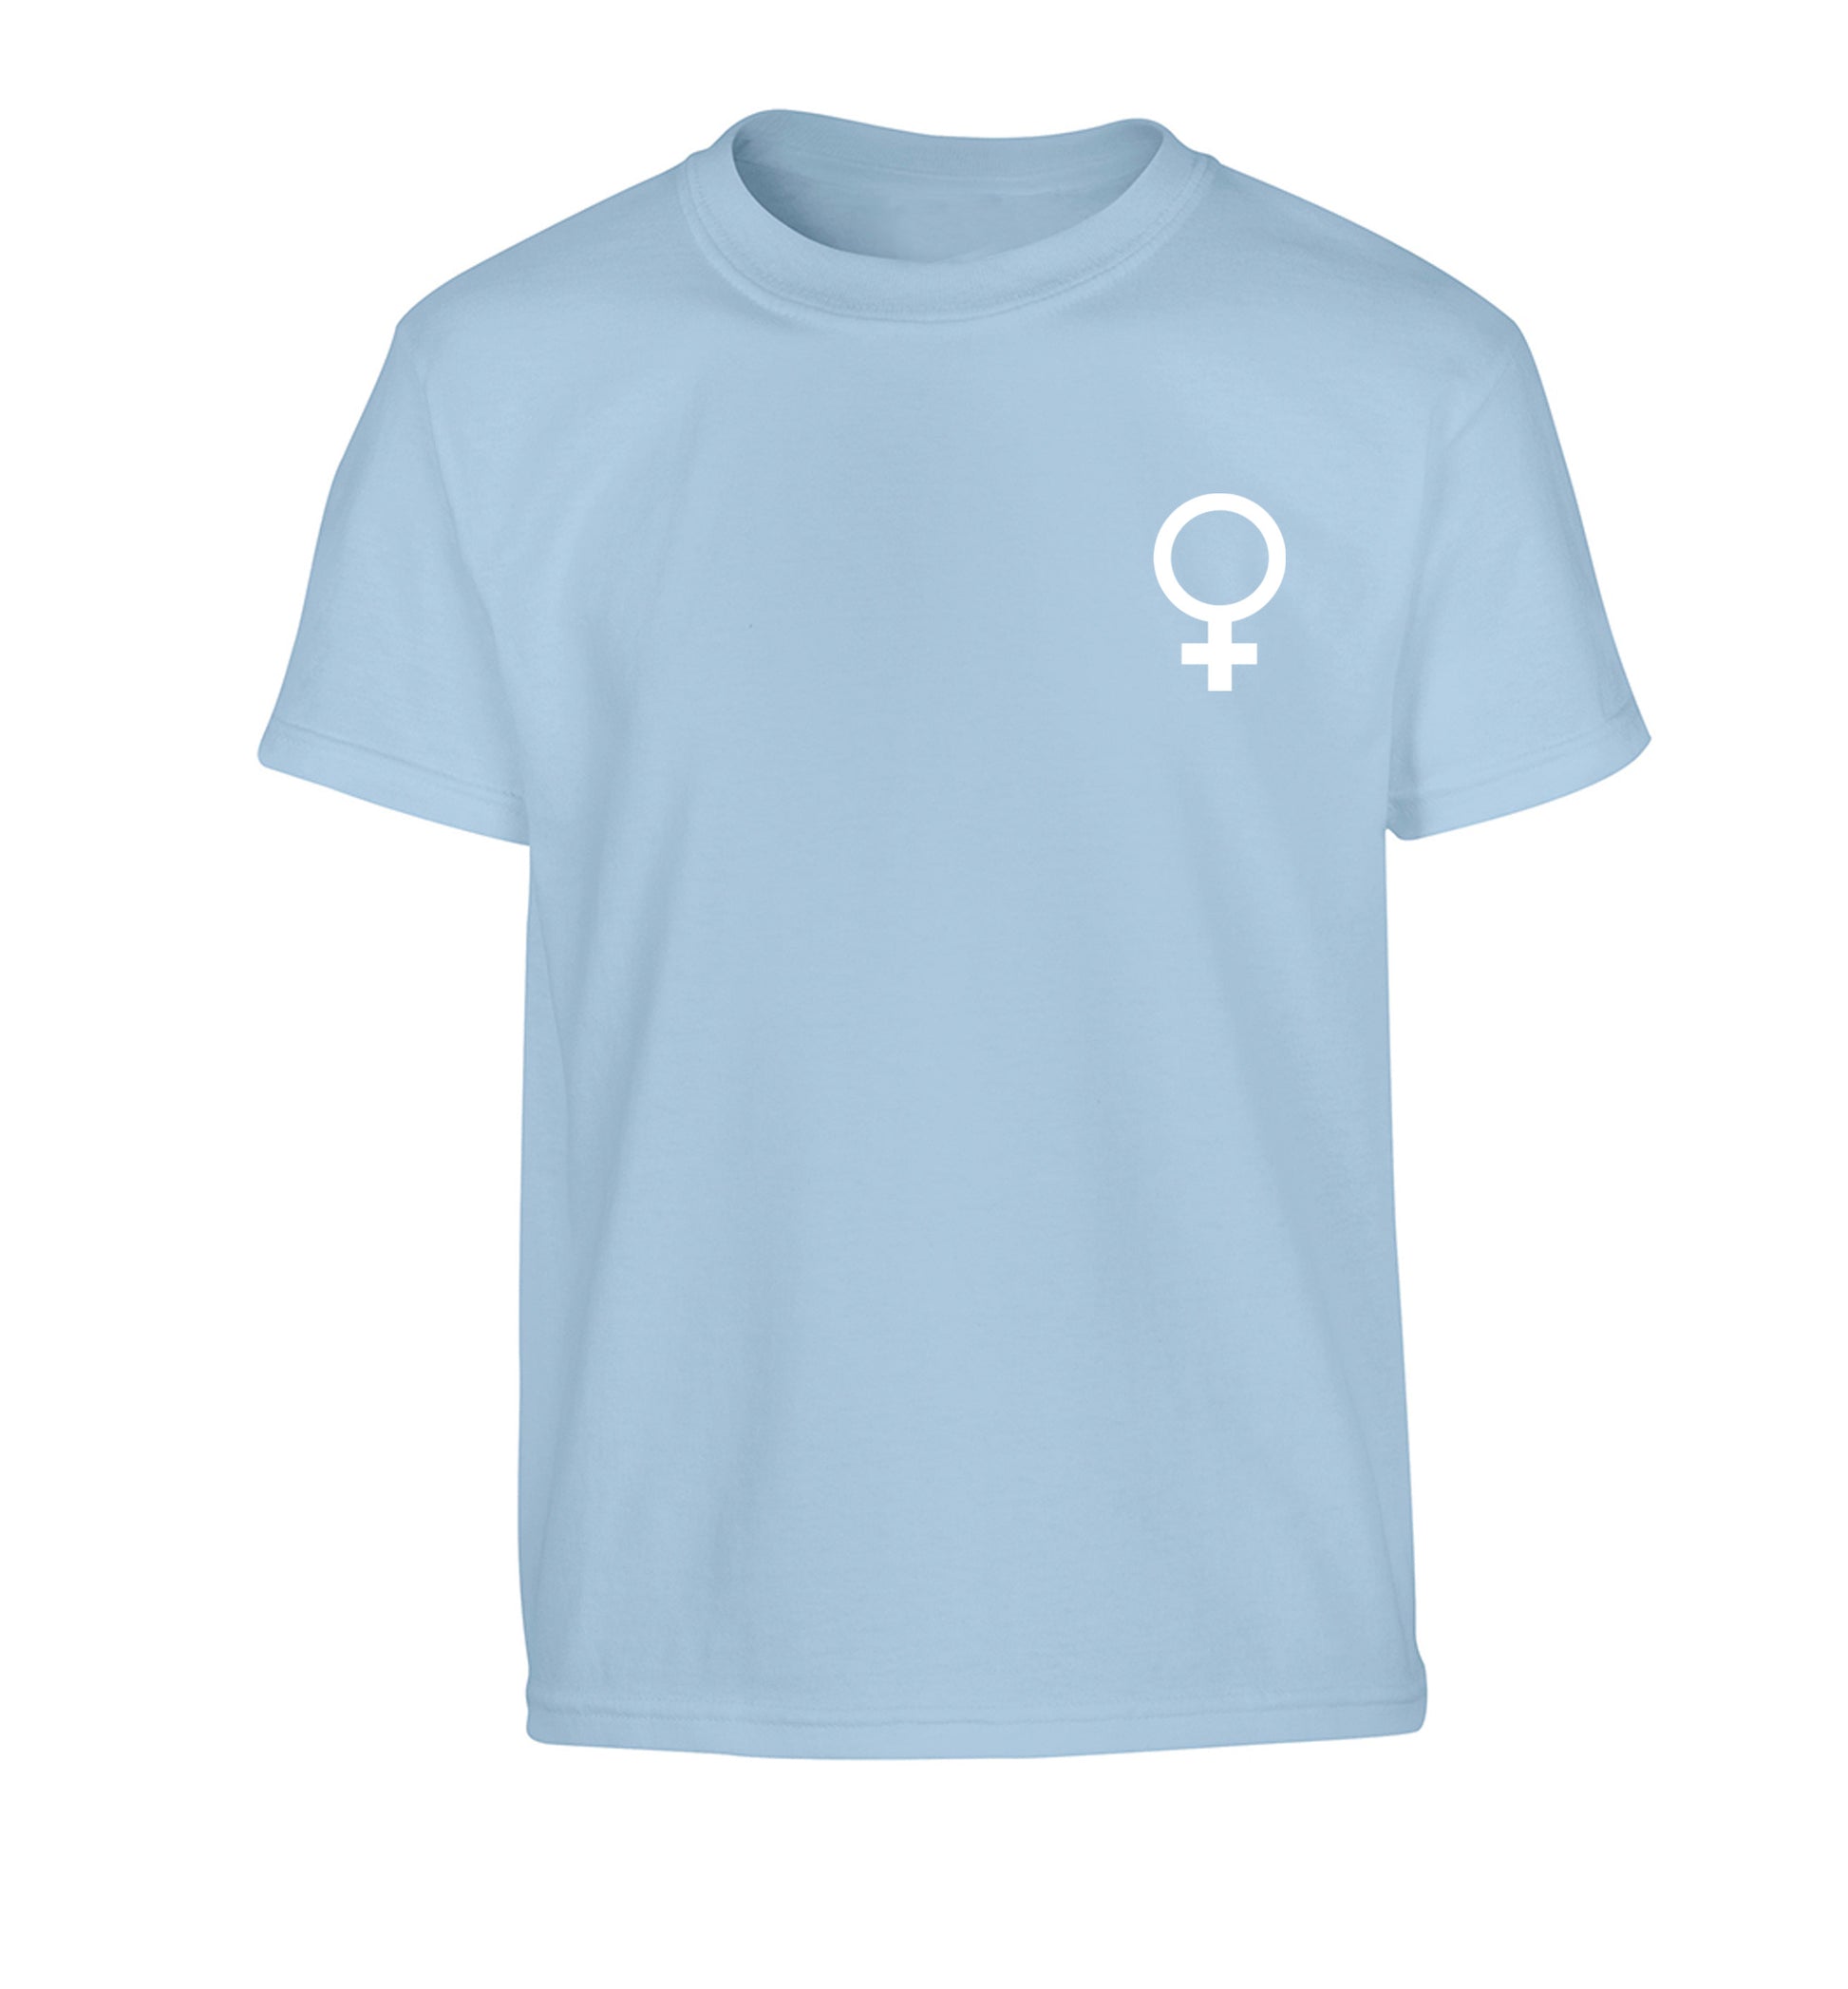 Female pocket symbol Children's light blue Tshirt 12-14 Years